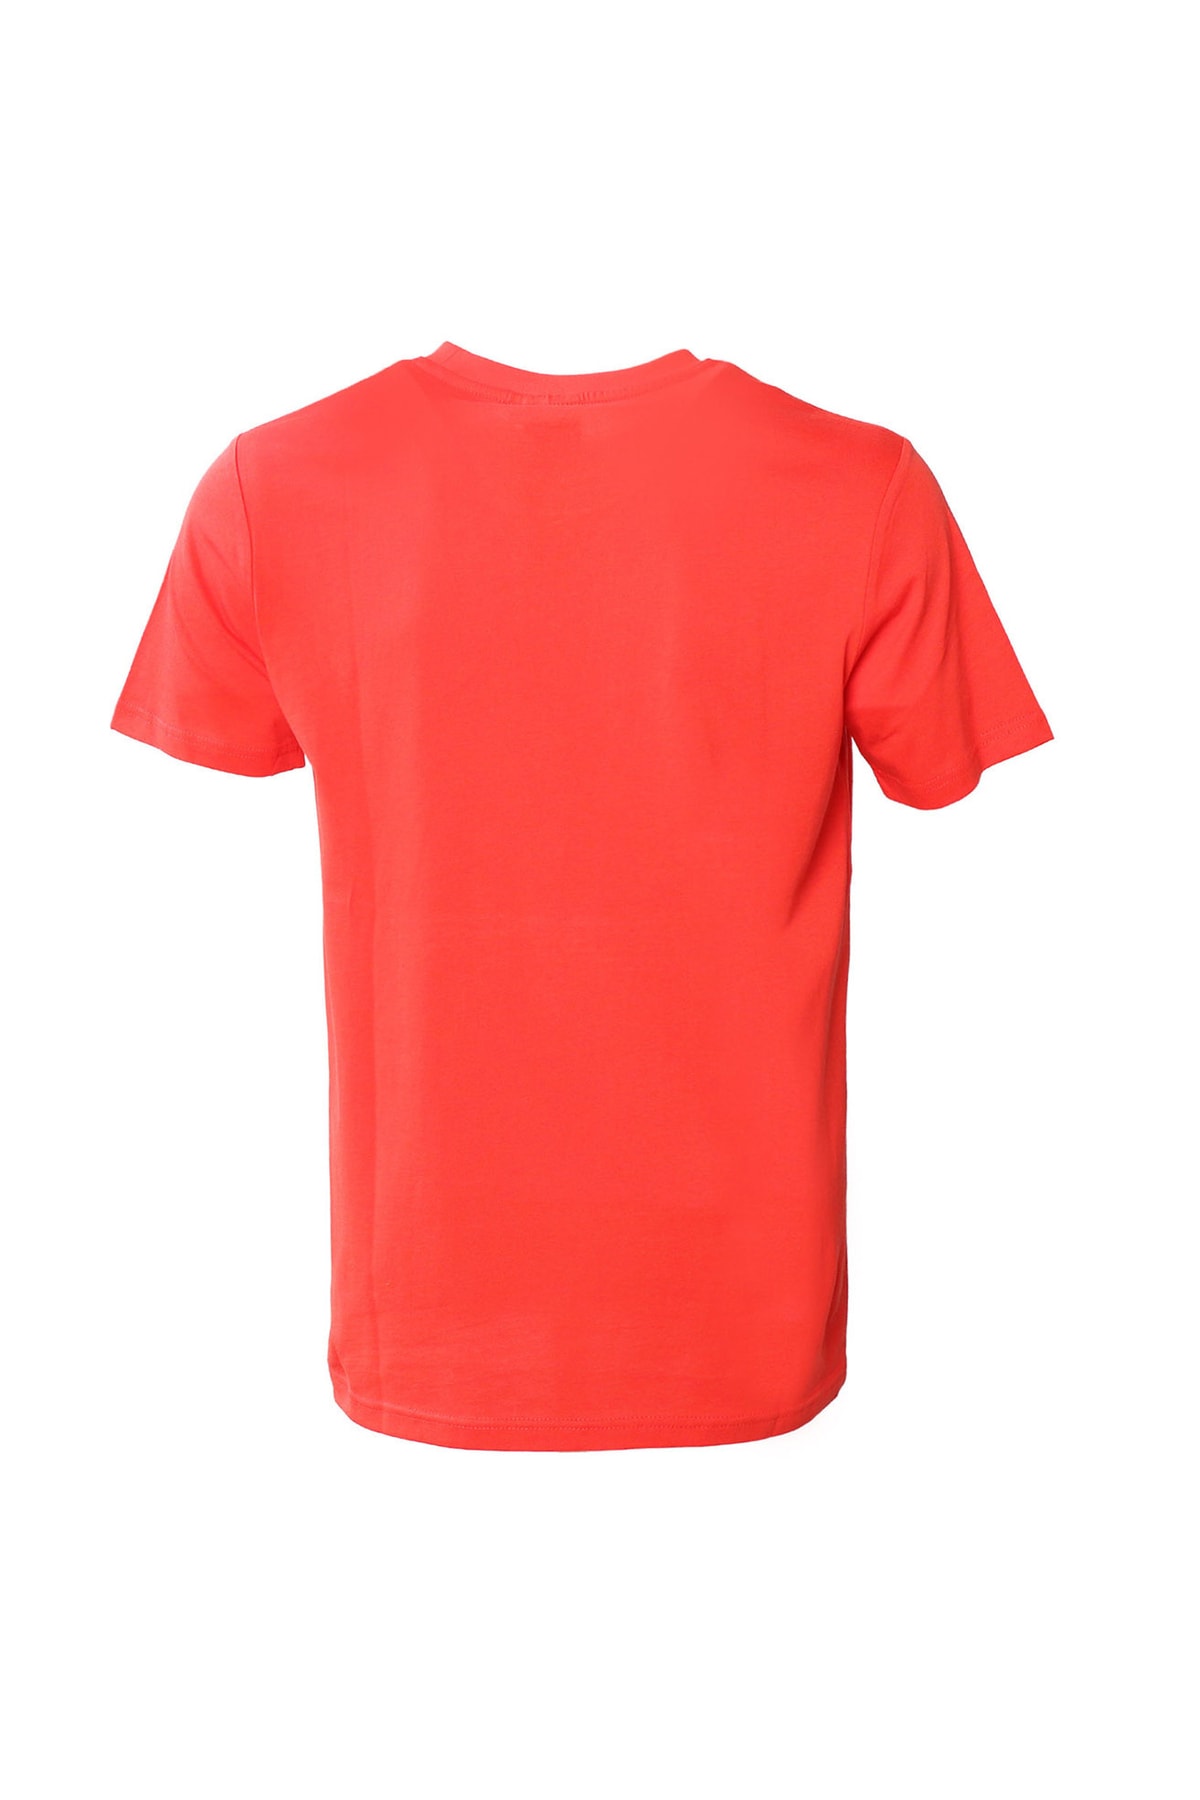 HUMMEL تی شرت مردانه قرمز با چاپ یقه خدمه 911562-1027 Hmlbalder M